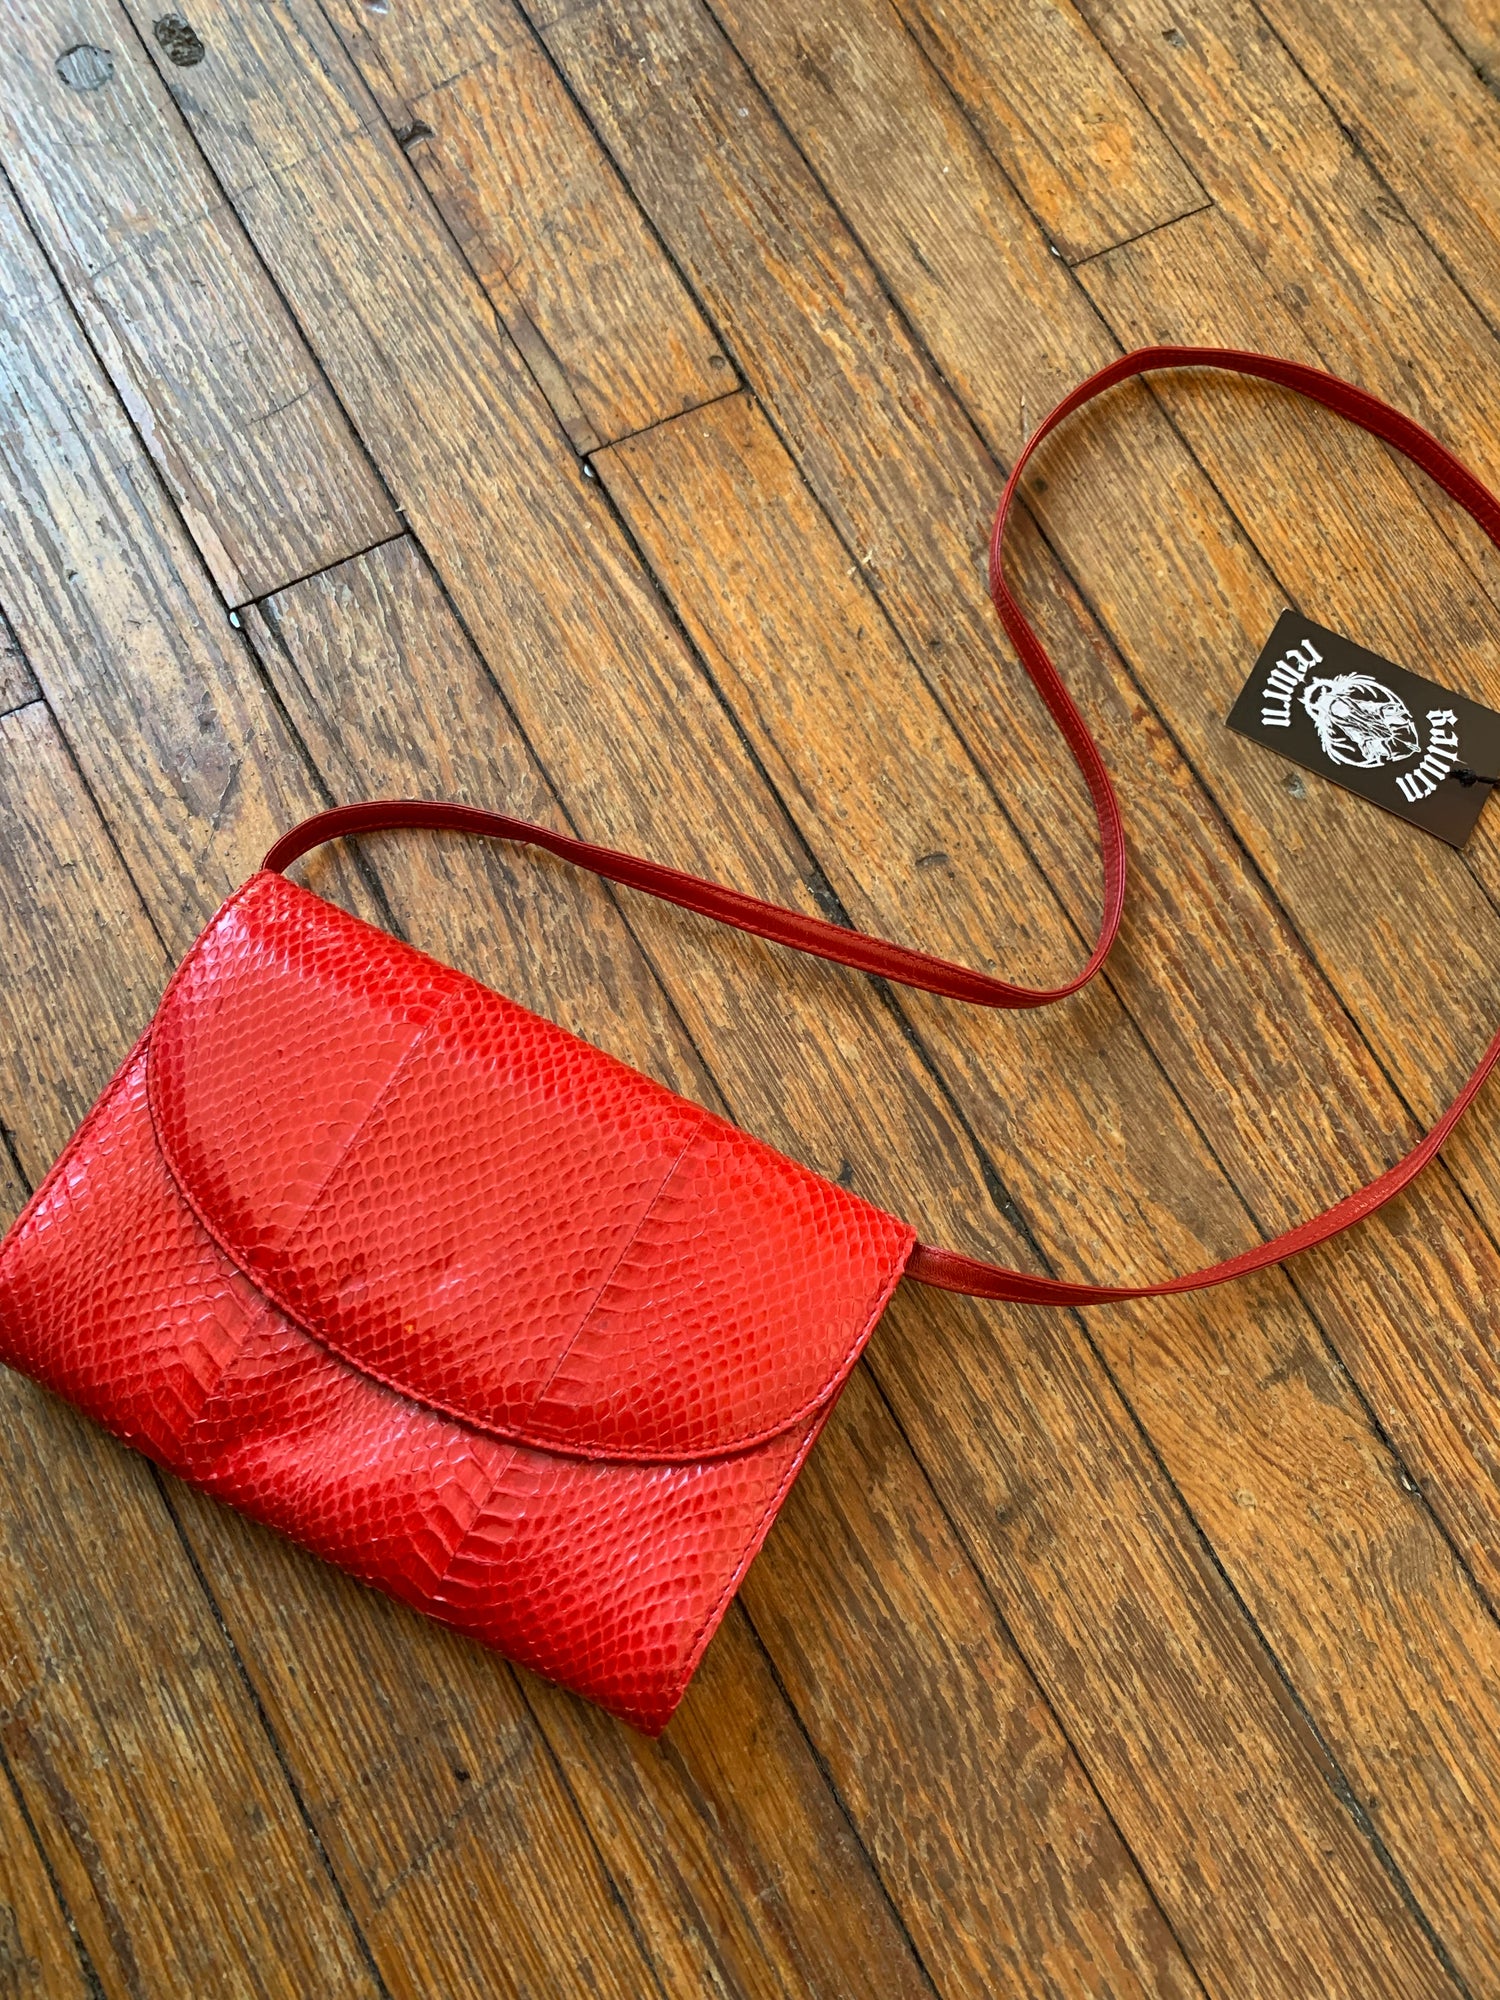 Giani Bernini, Bags, Authentic Giani Bernini Red Leather Satchel Purse